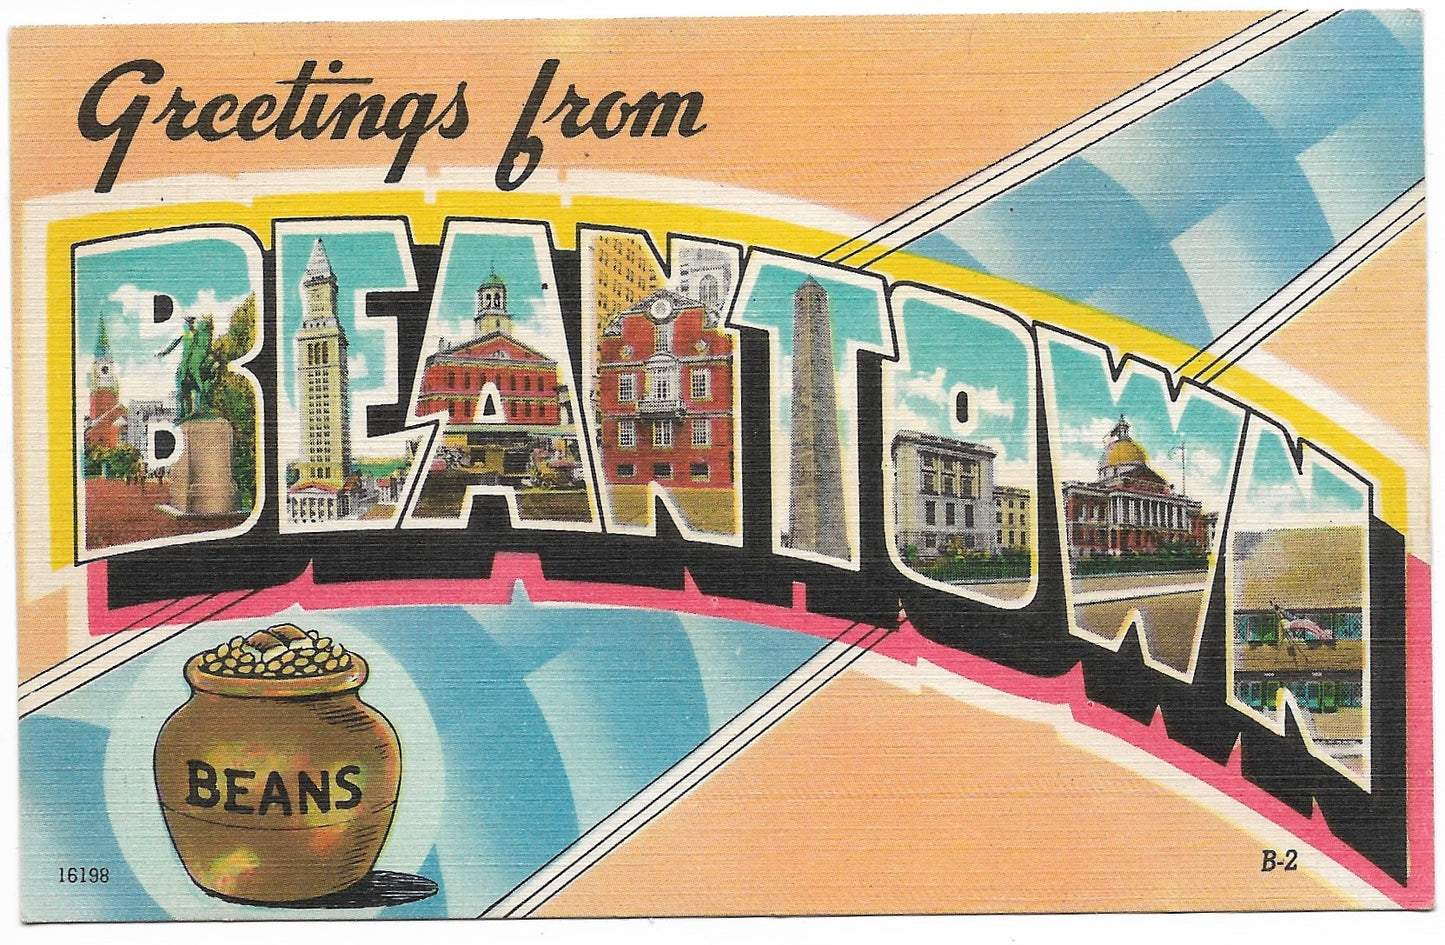 Greetings from Beantown - Boston, Massachusetts Vintage Postcard